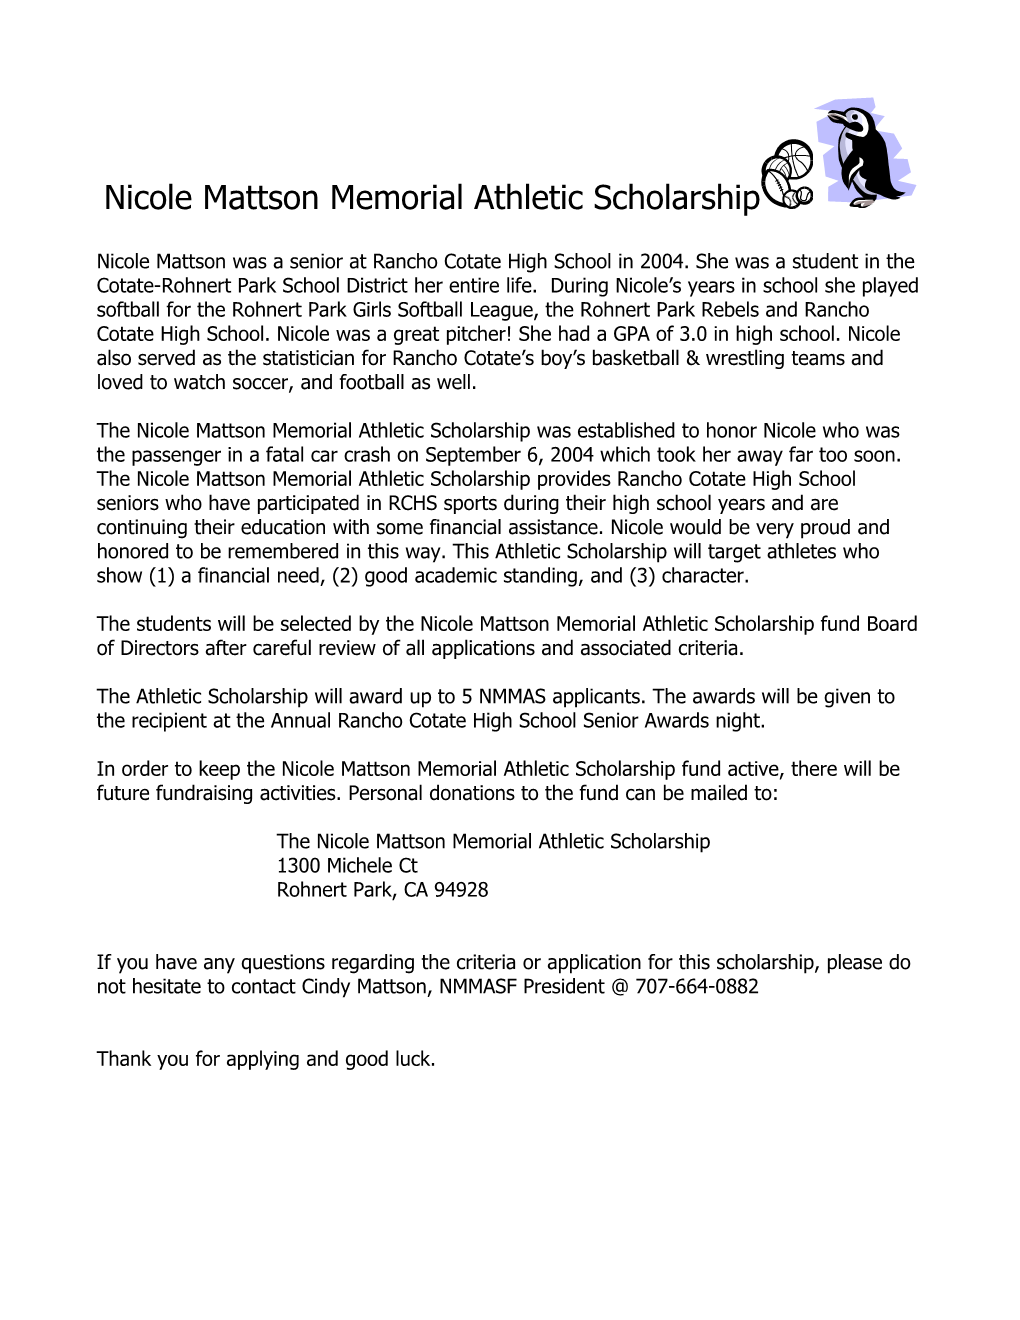 Nicole Mattson Memorial Athletic Scholarship